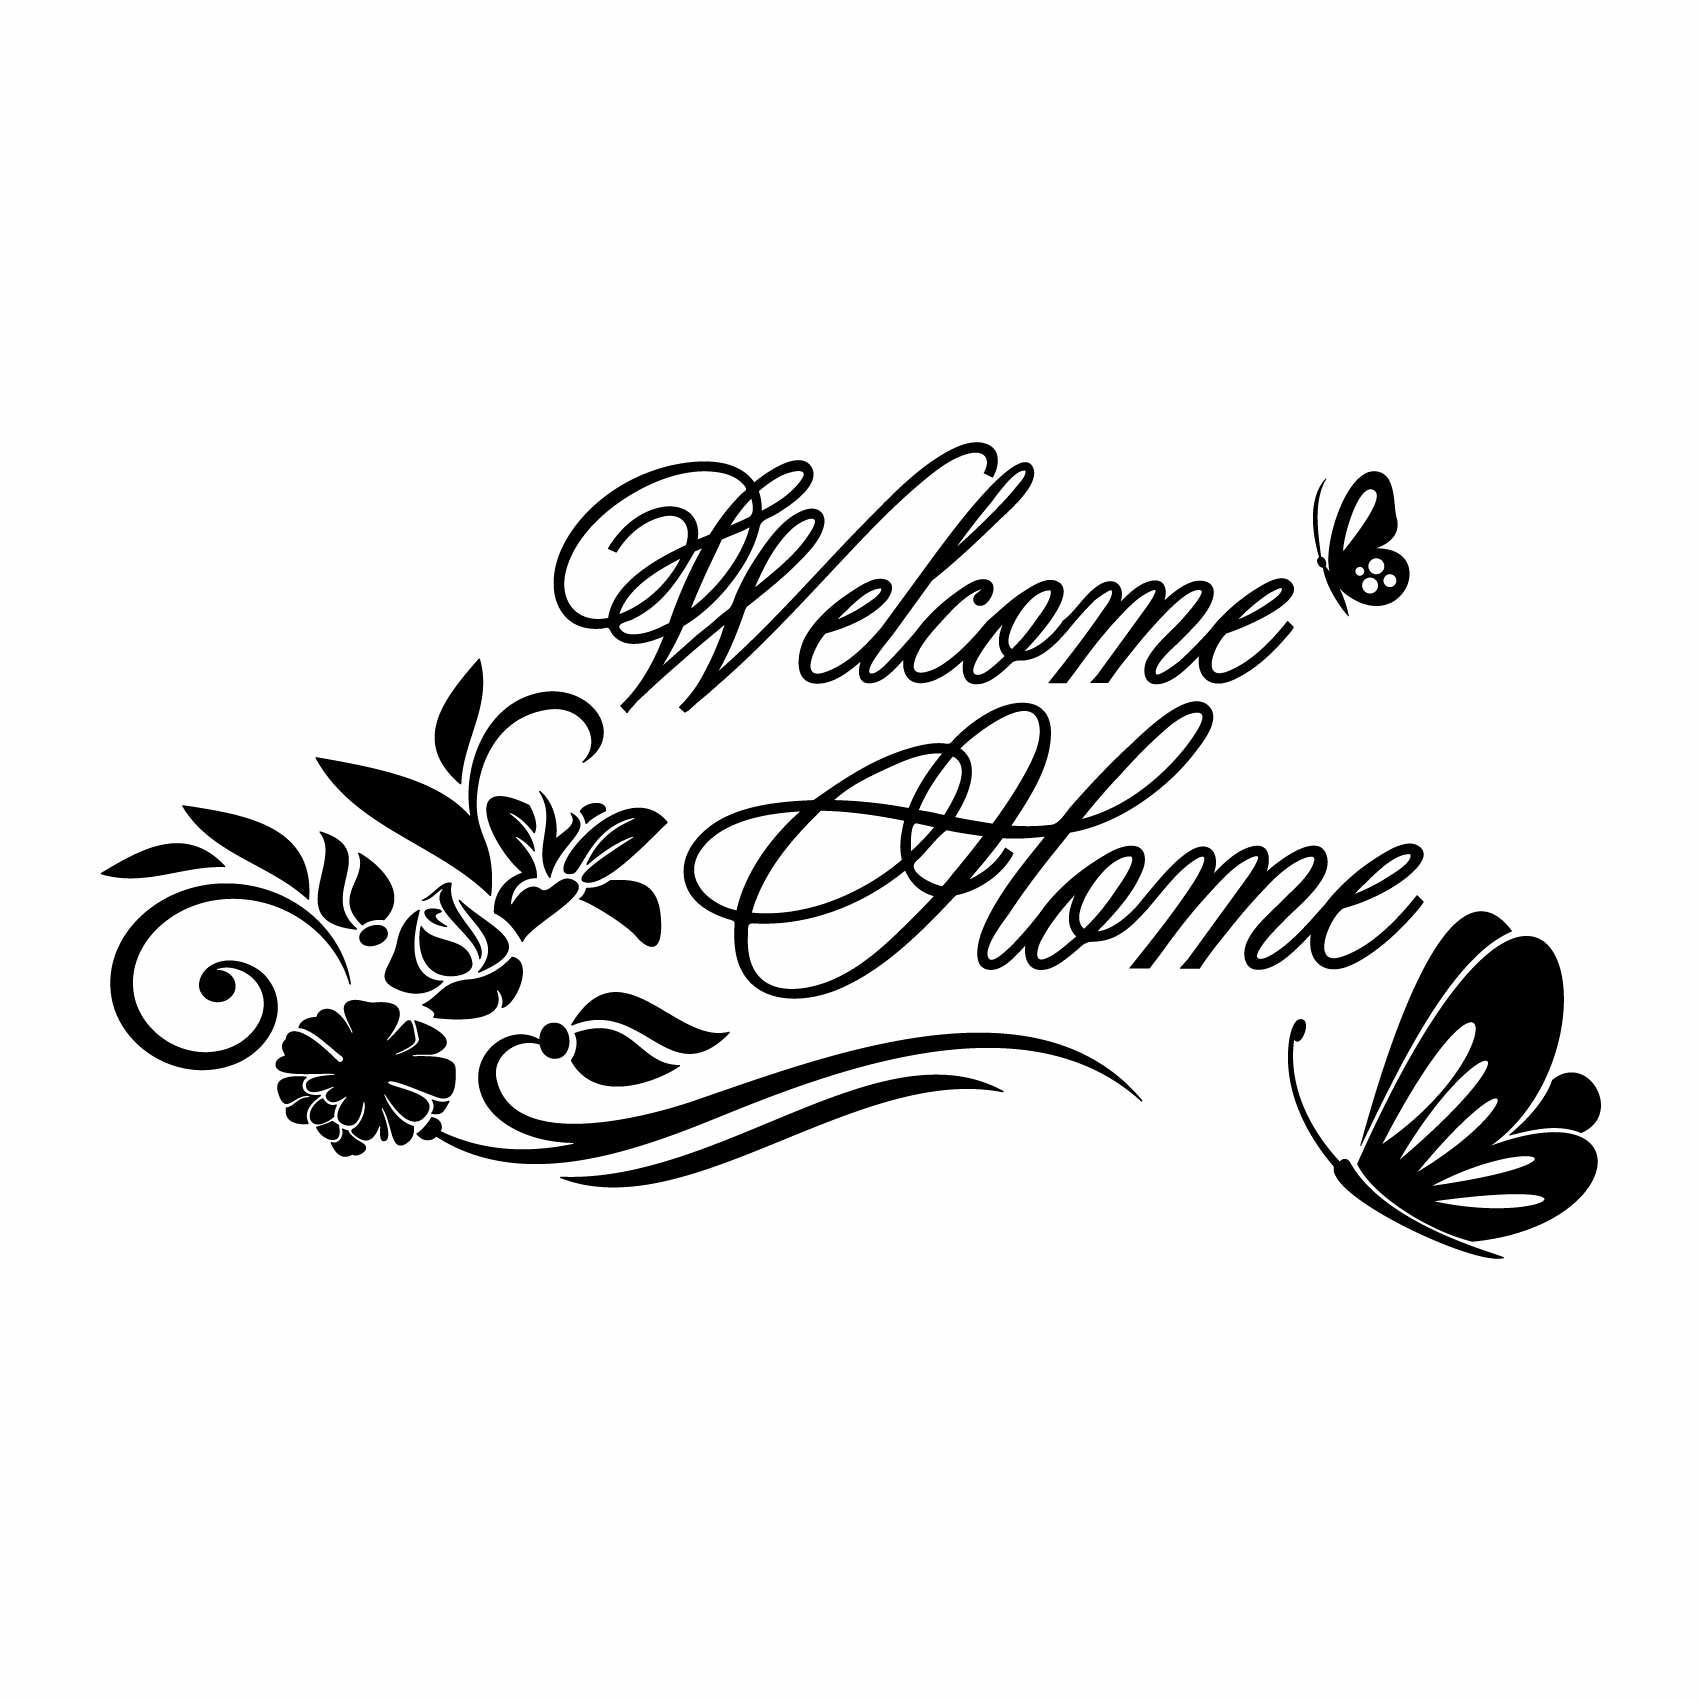 stickers-muraux-welcome-home-ref2welcome-autocollant-muraux-bienvenue-sticker-mural-welcome-home-sweet-home-entrée-séjour-salon-cuisine-porte-deco-(2)